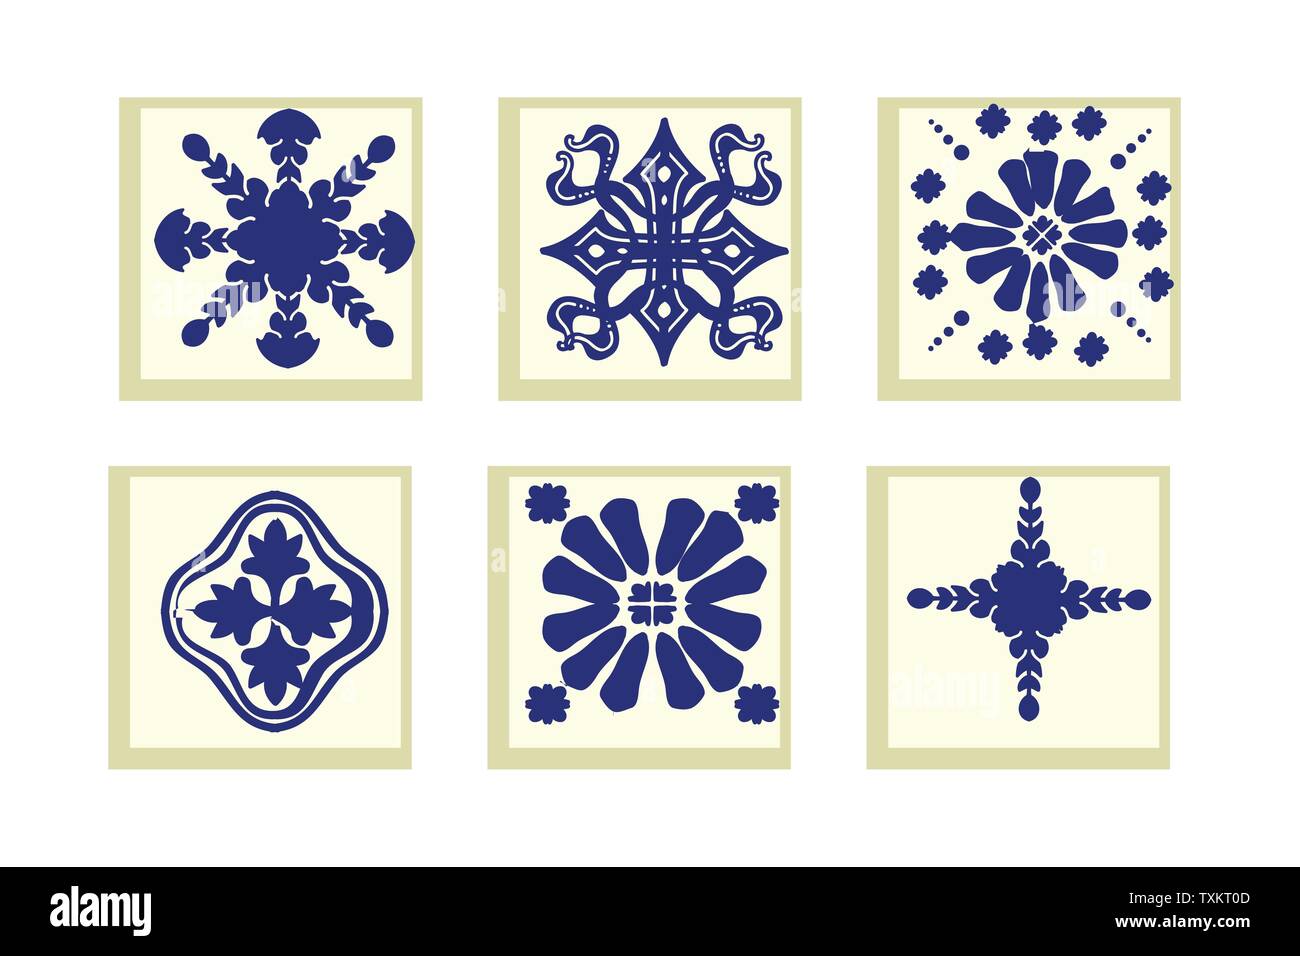 Vektor-Fliesenmuster, Lissabon floralen Mosaik, mediterrane nahtlose Marineblau ornament Stock Vektor